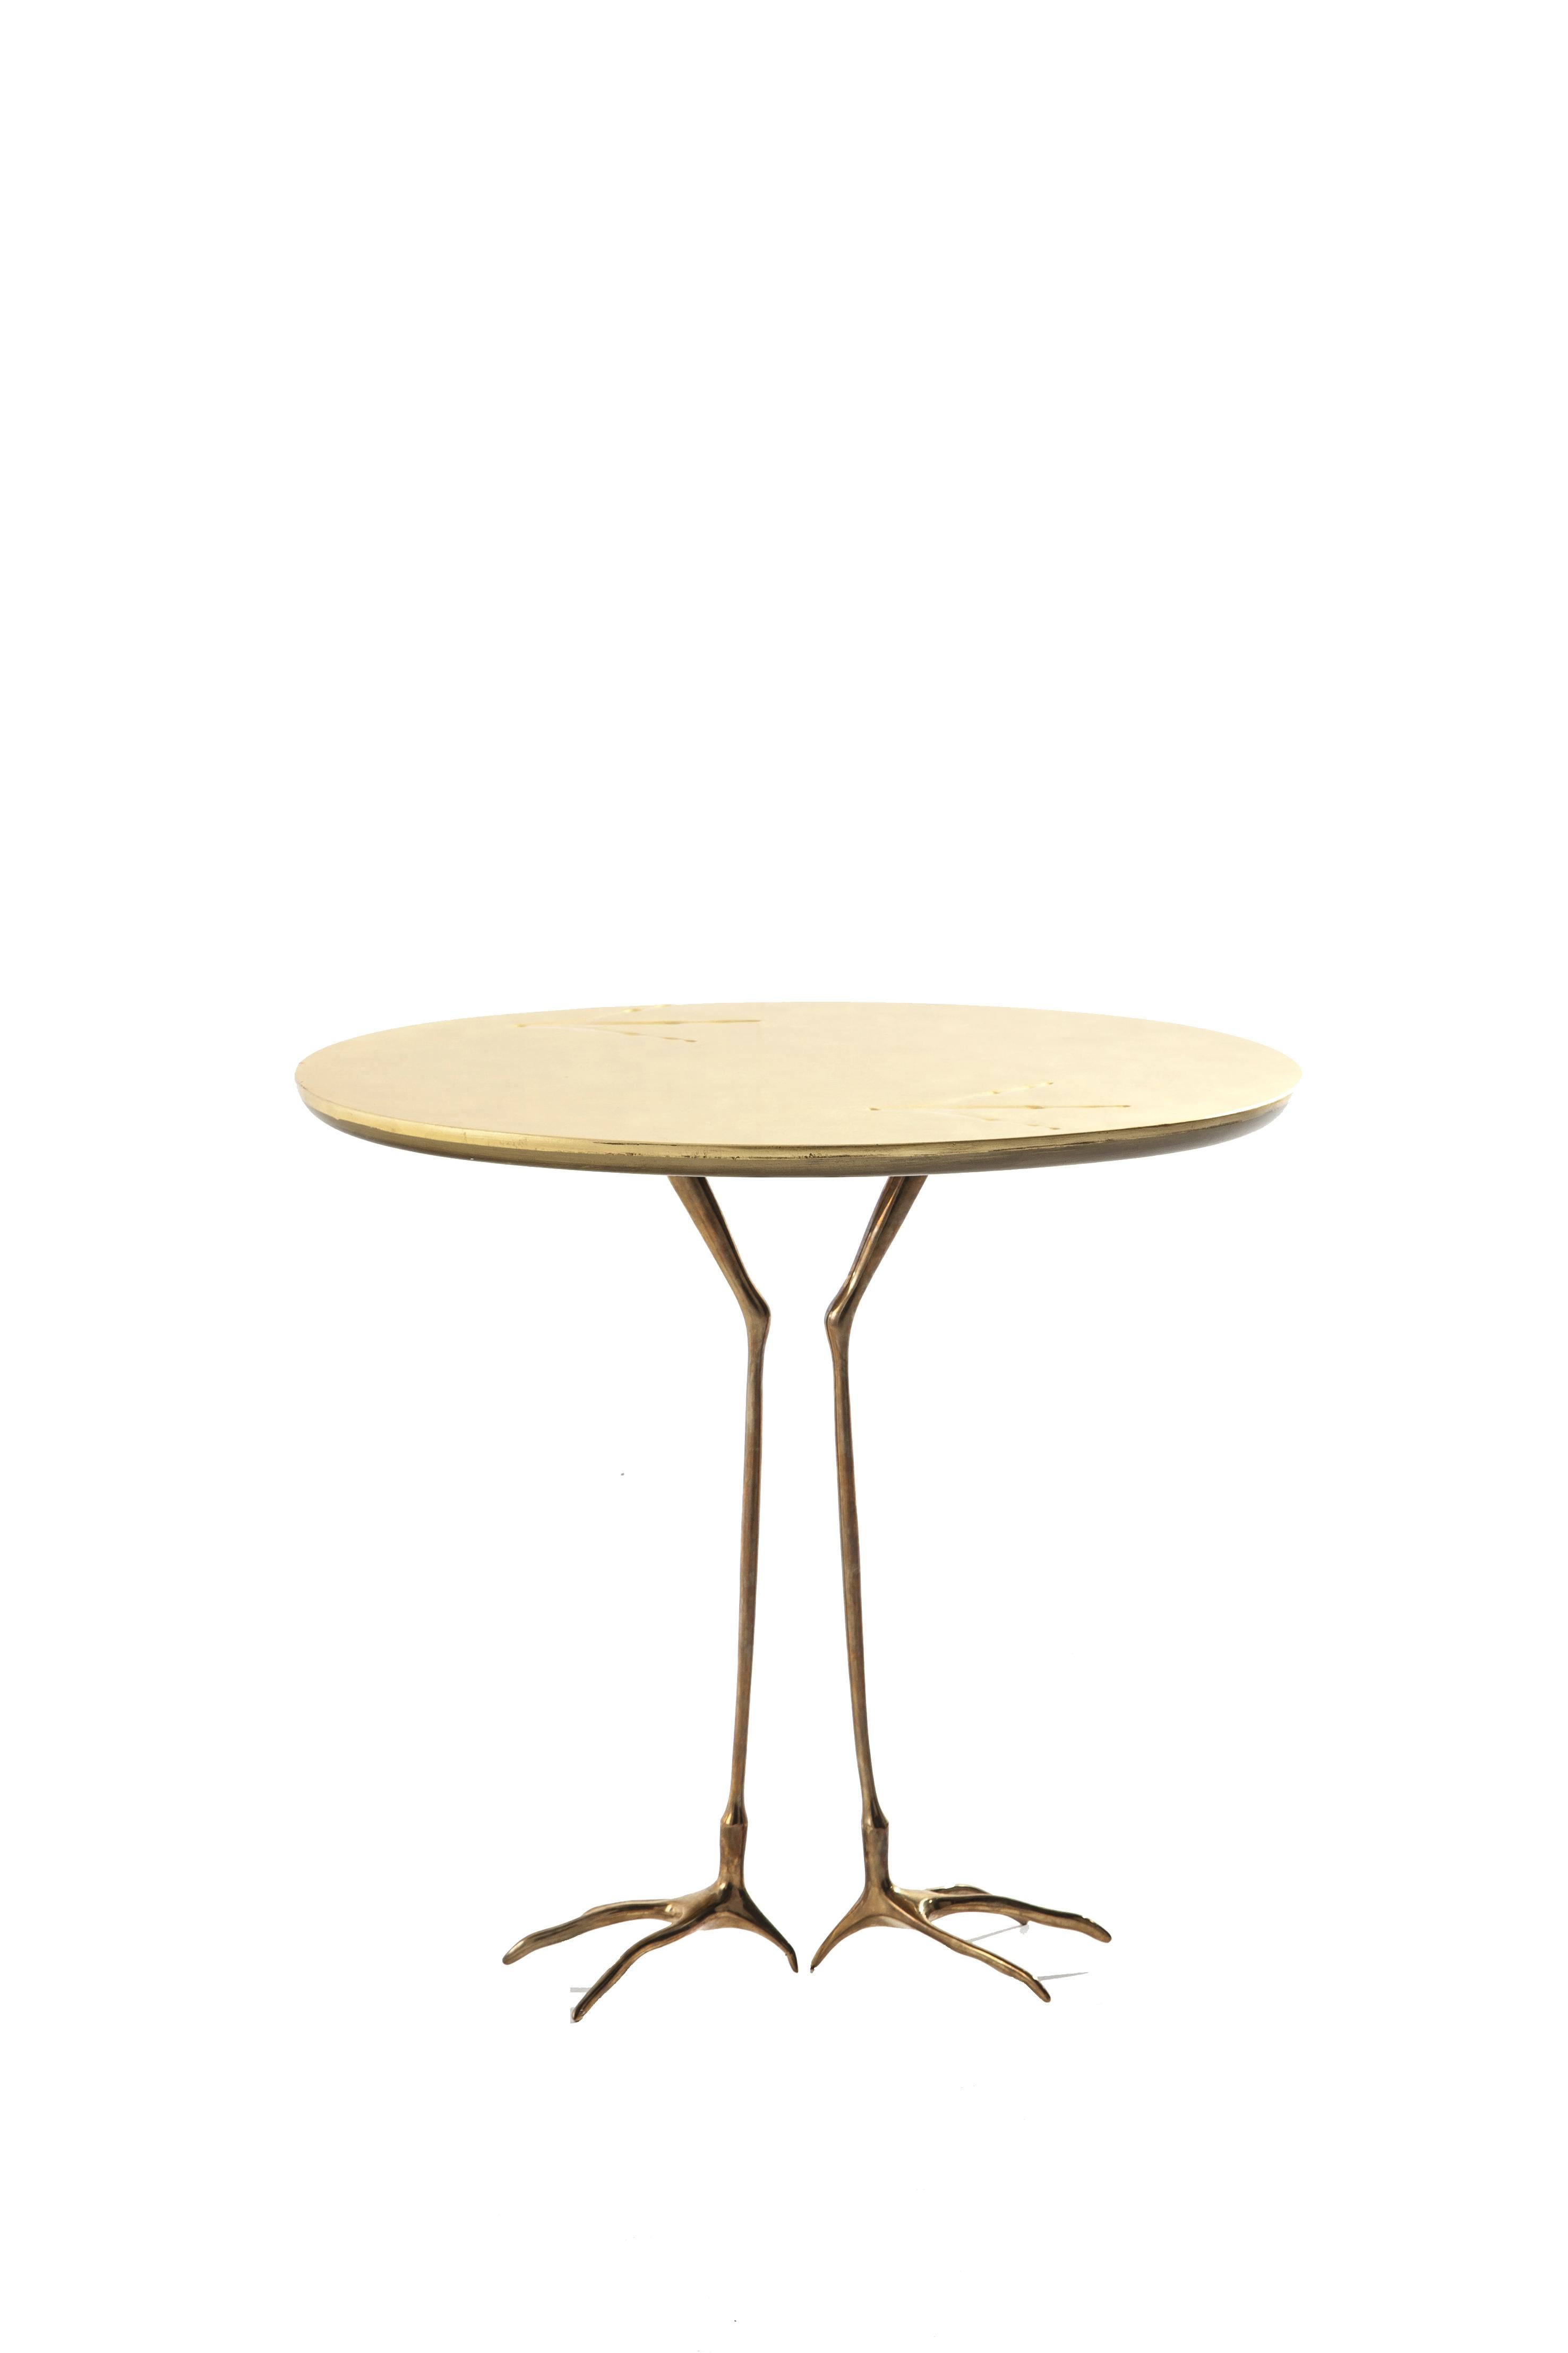 Italian Meret Oppenheim Traccia Sculptural Table For Sale